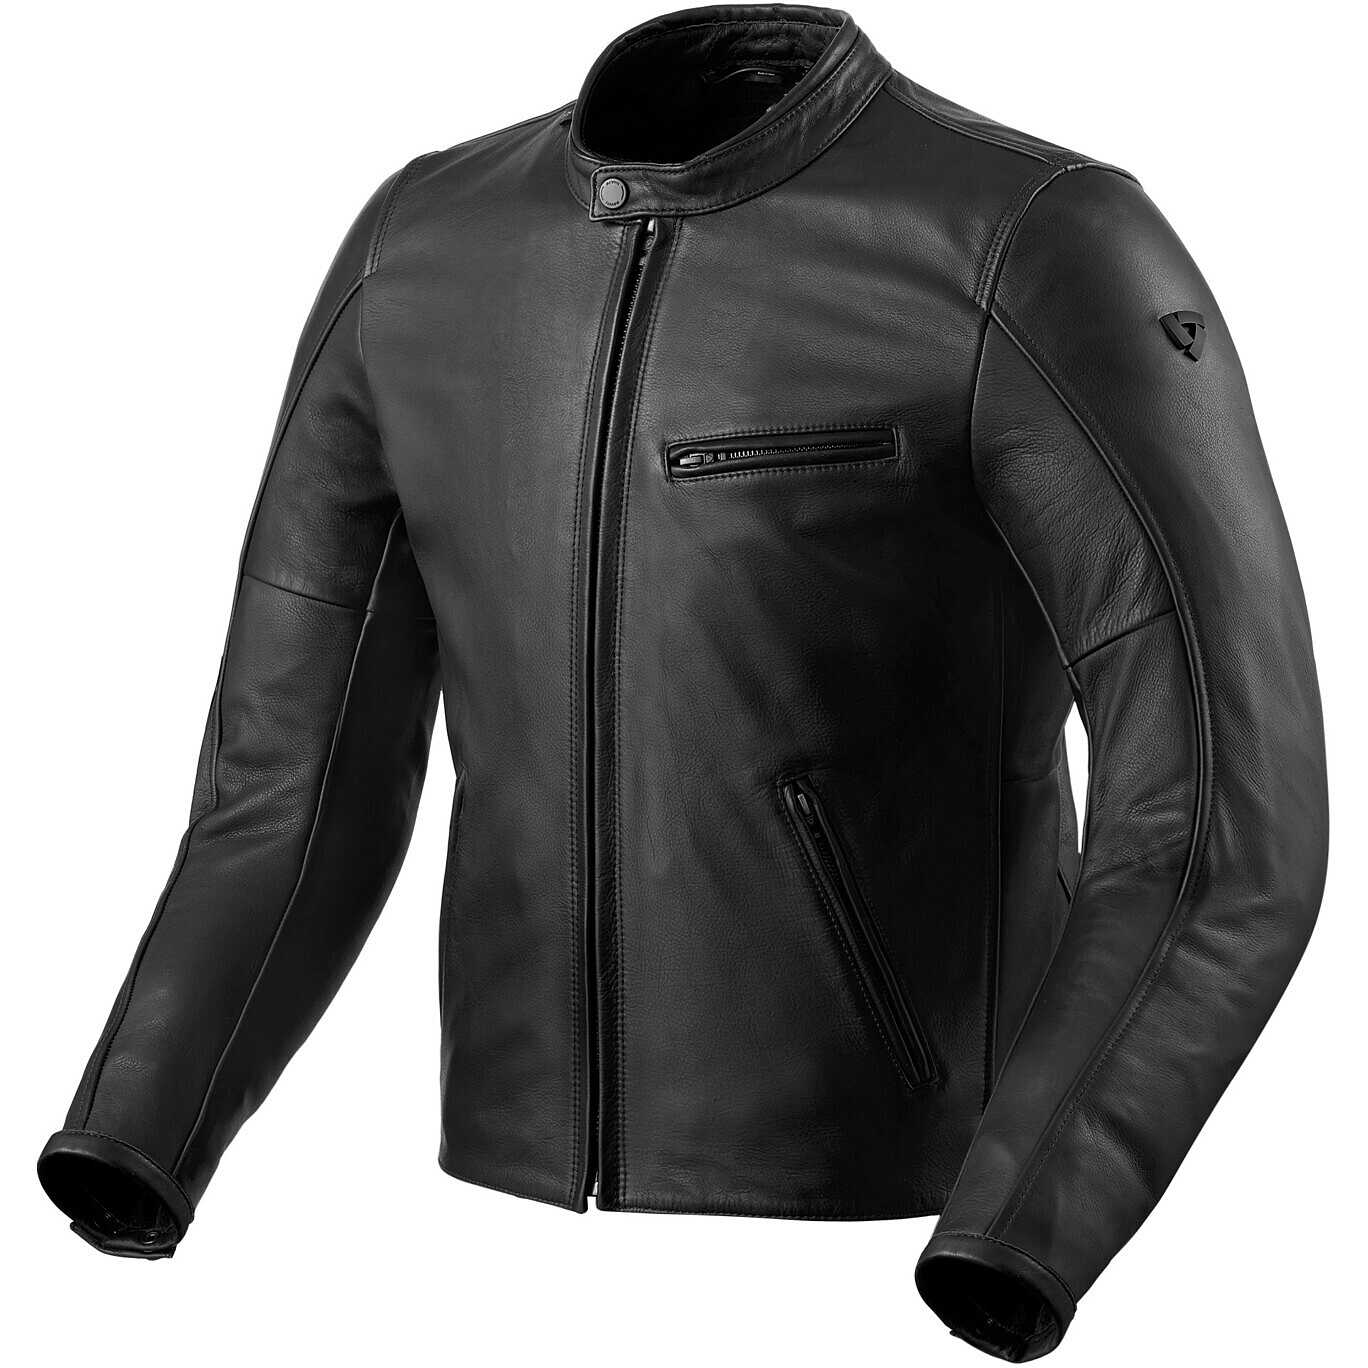 Rev'it RINO Custom Leather Motorcycle Jacket Black For Sale Online ...